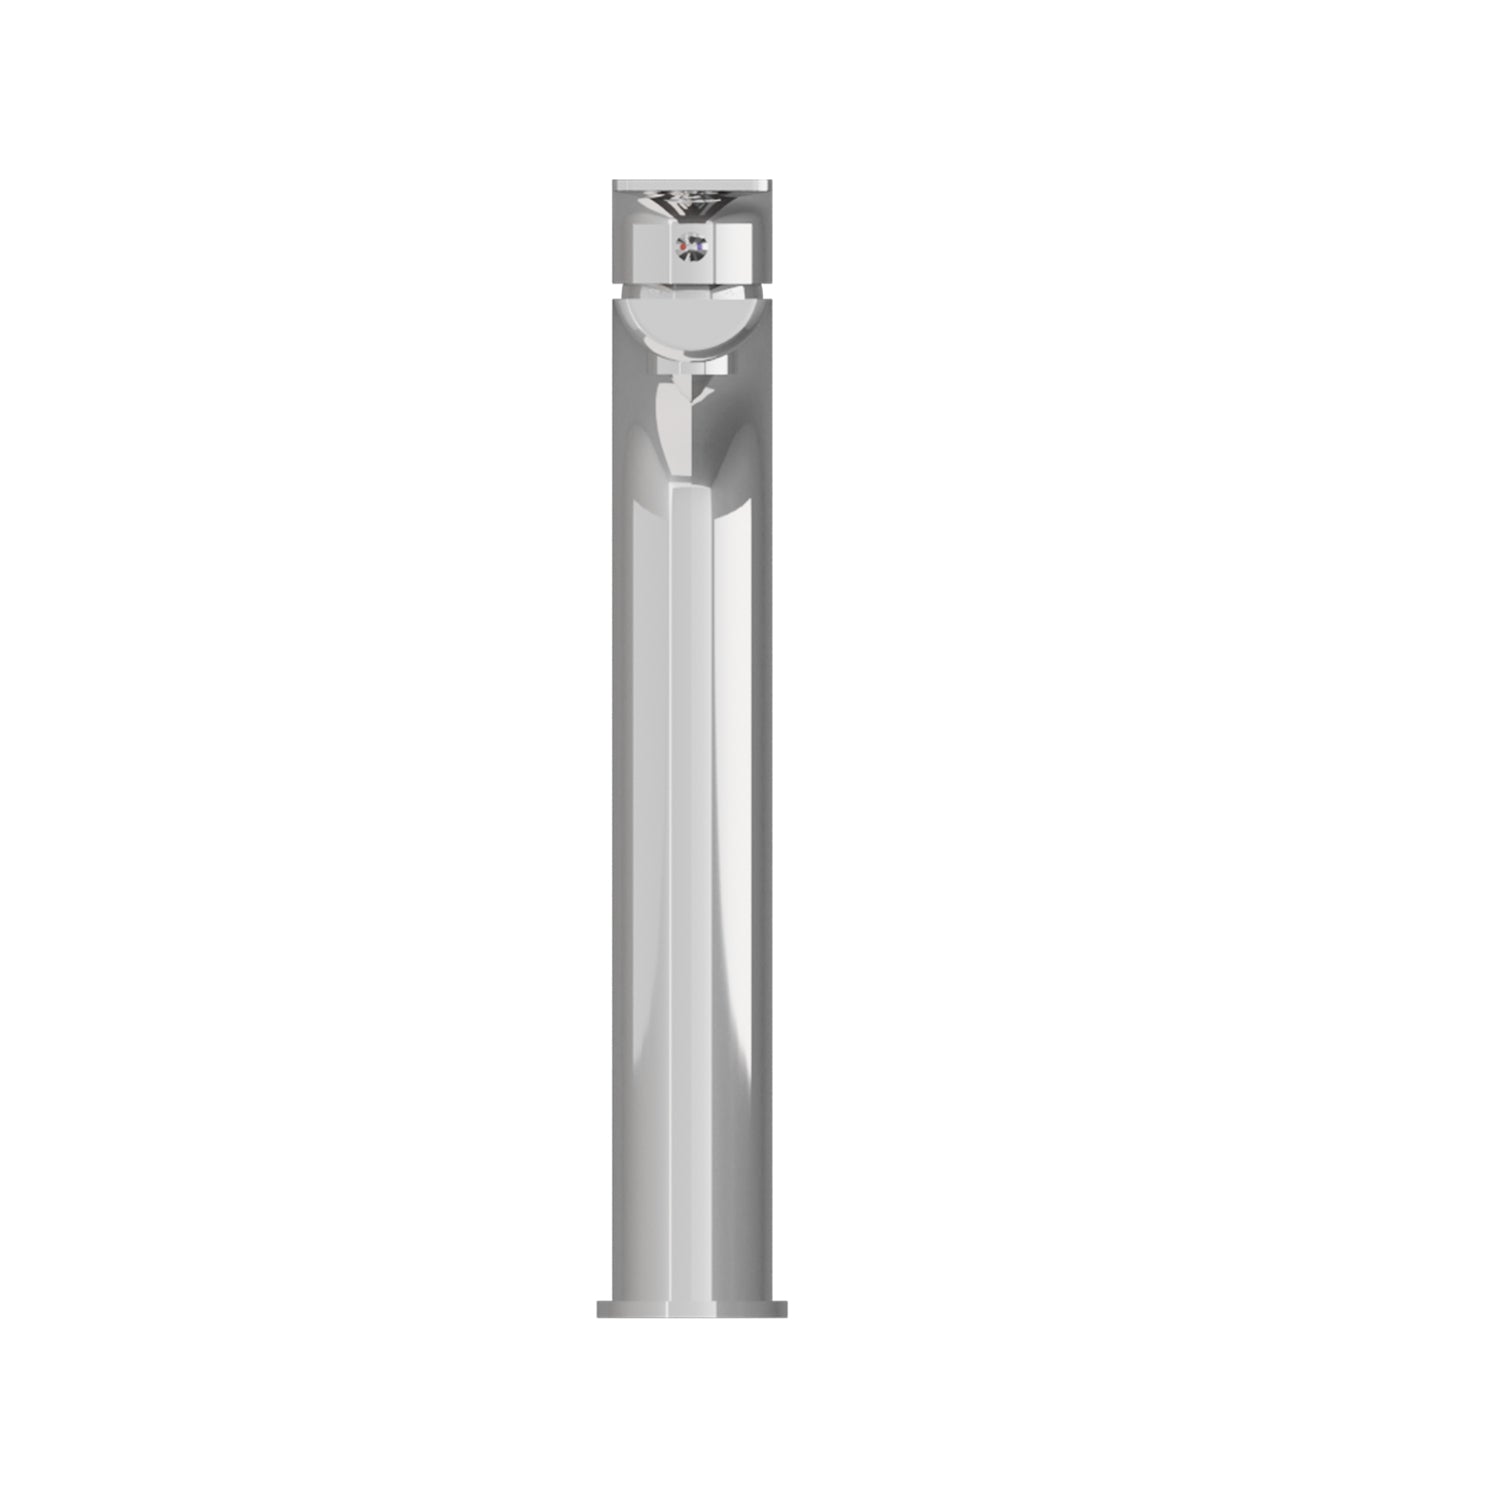 DAX Single Handle Bathroom Faucet (DAX-8108B)